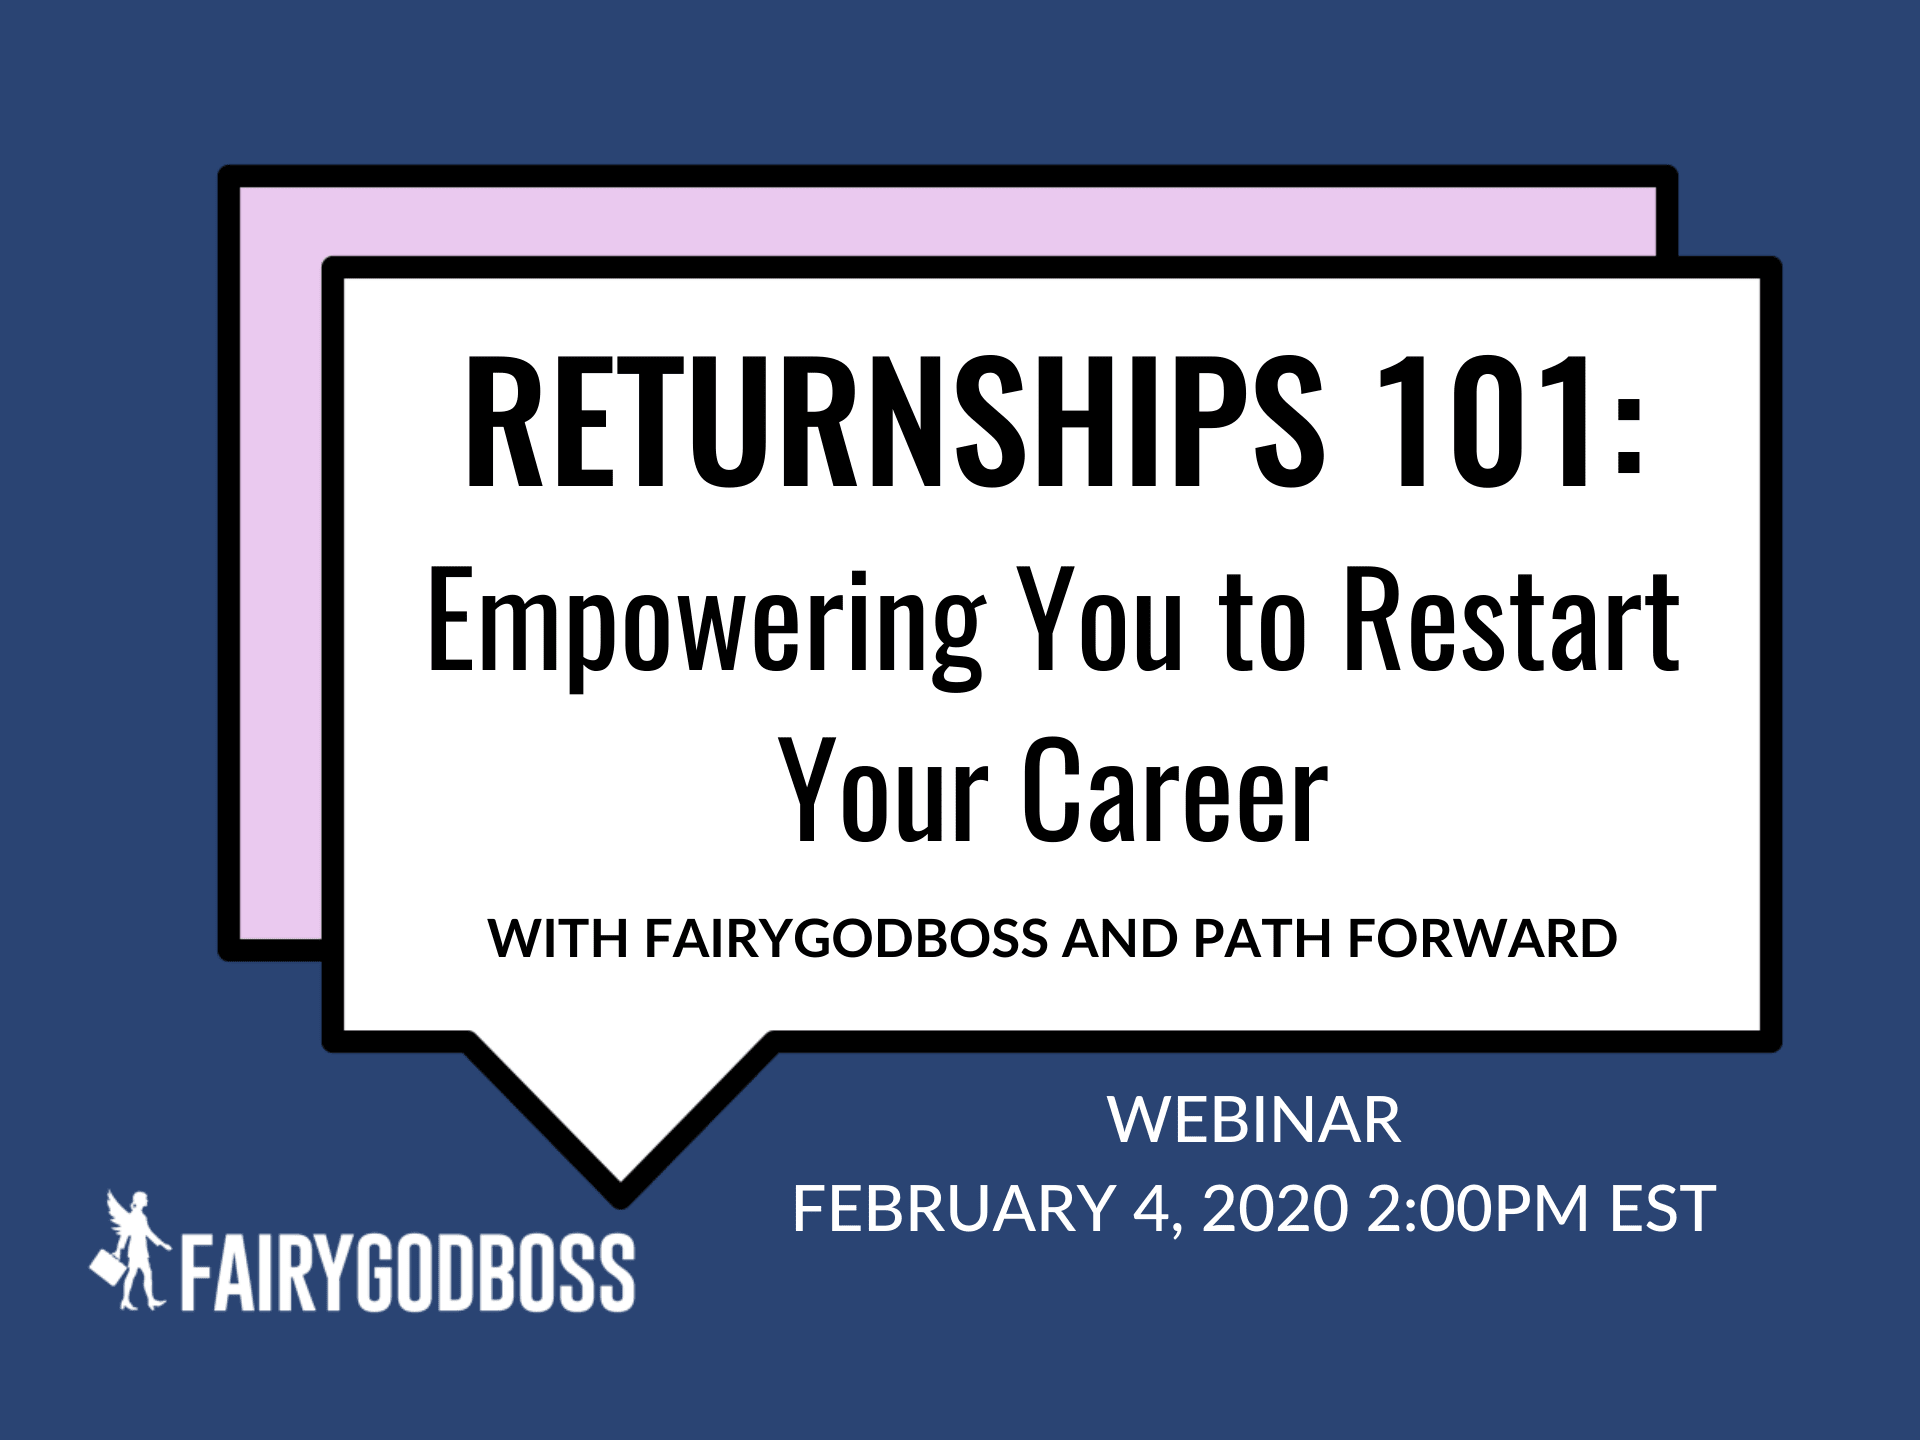 Returnships 101: Empowering You to Restart Your Career